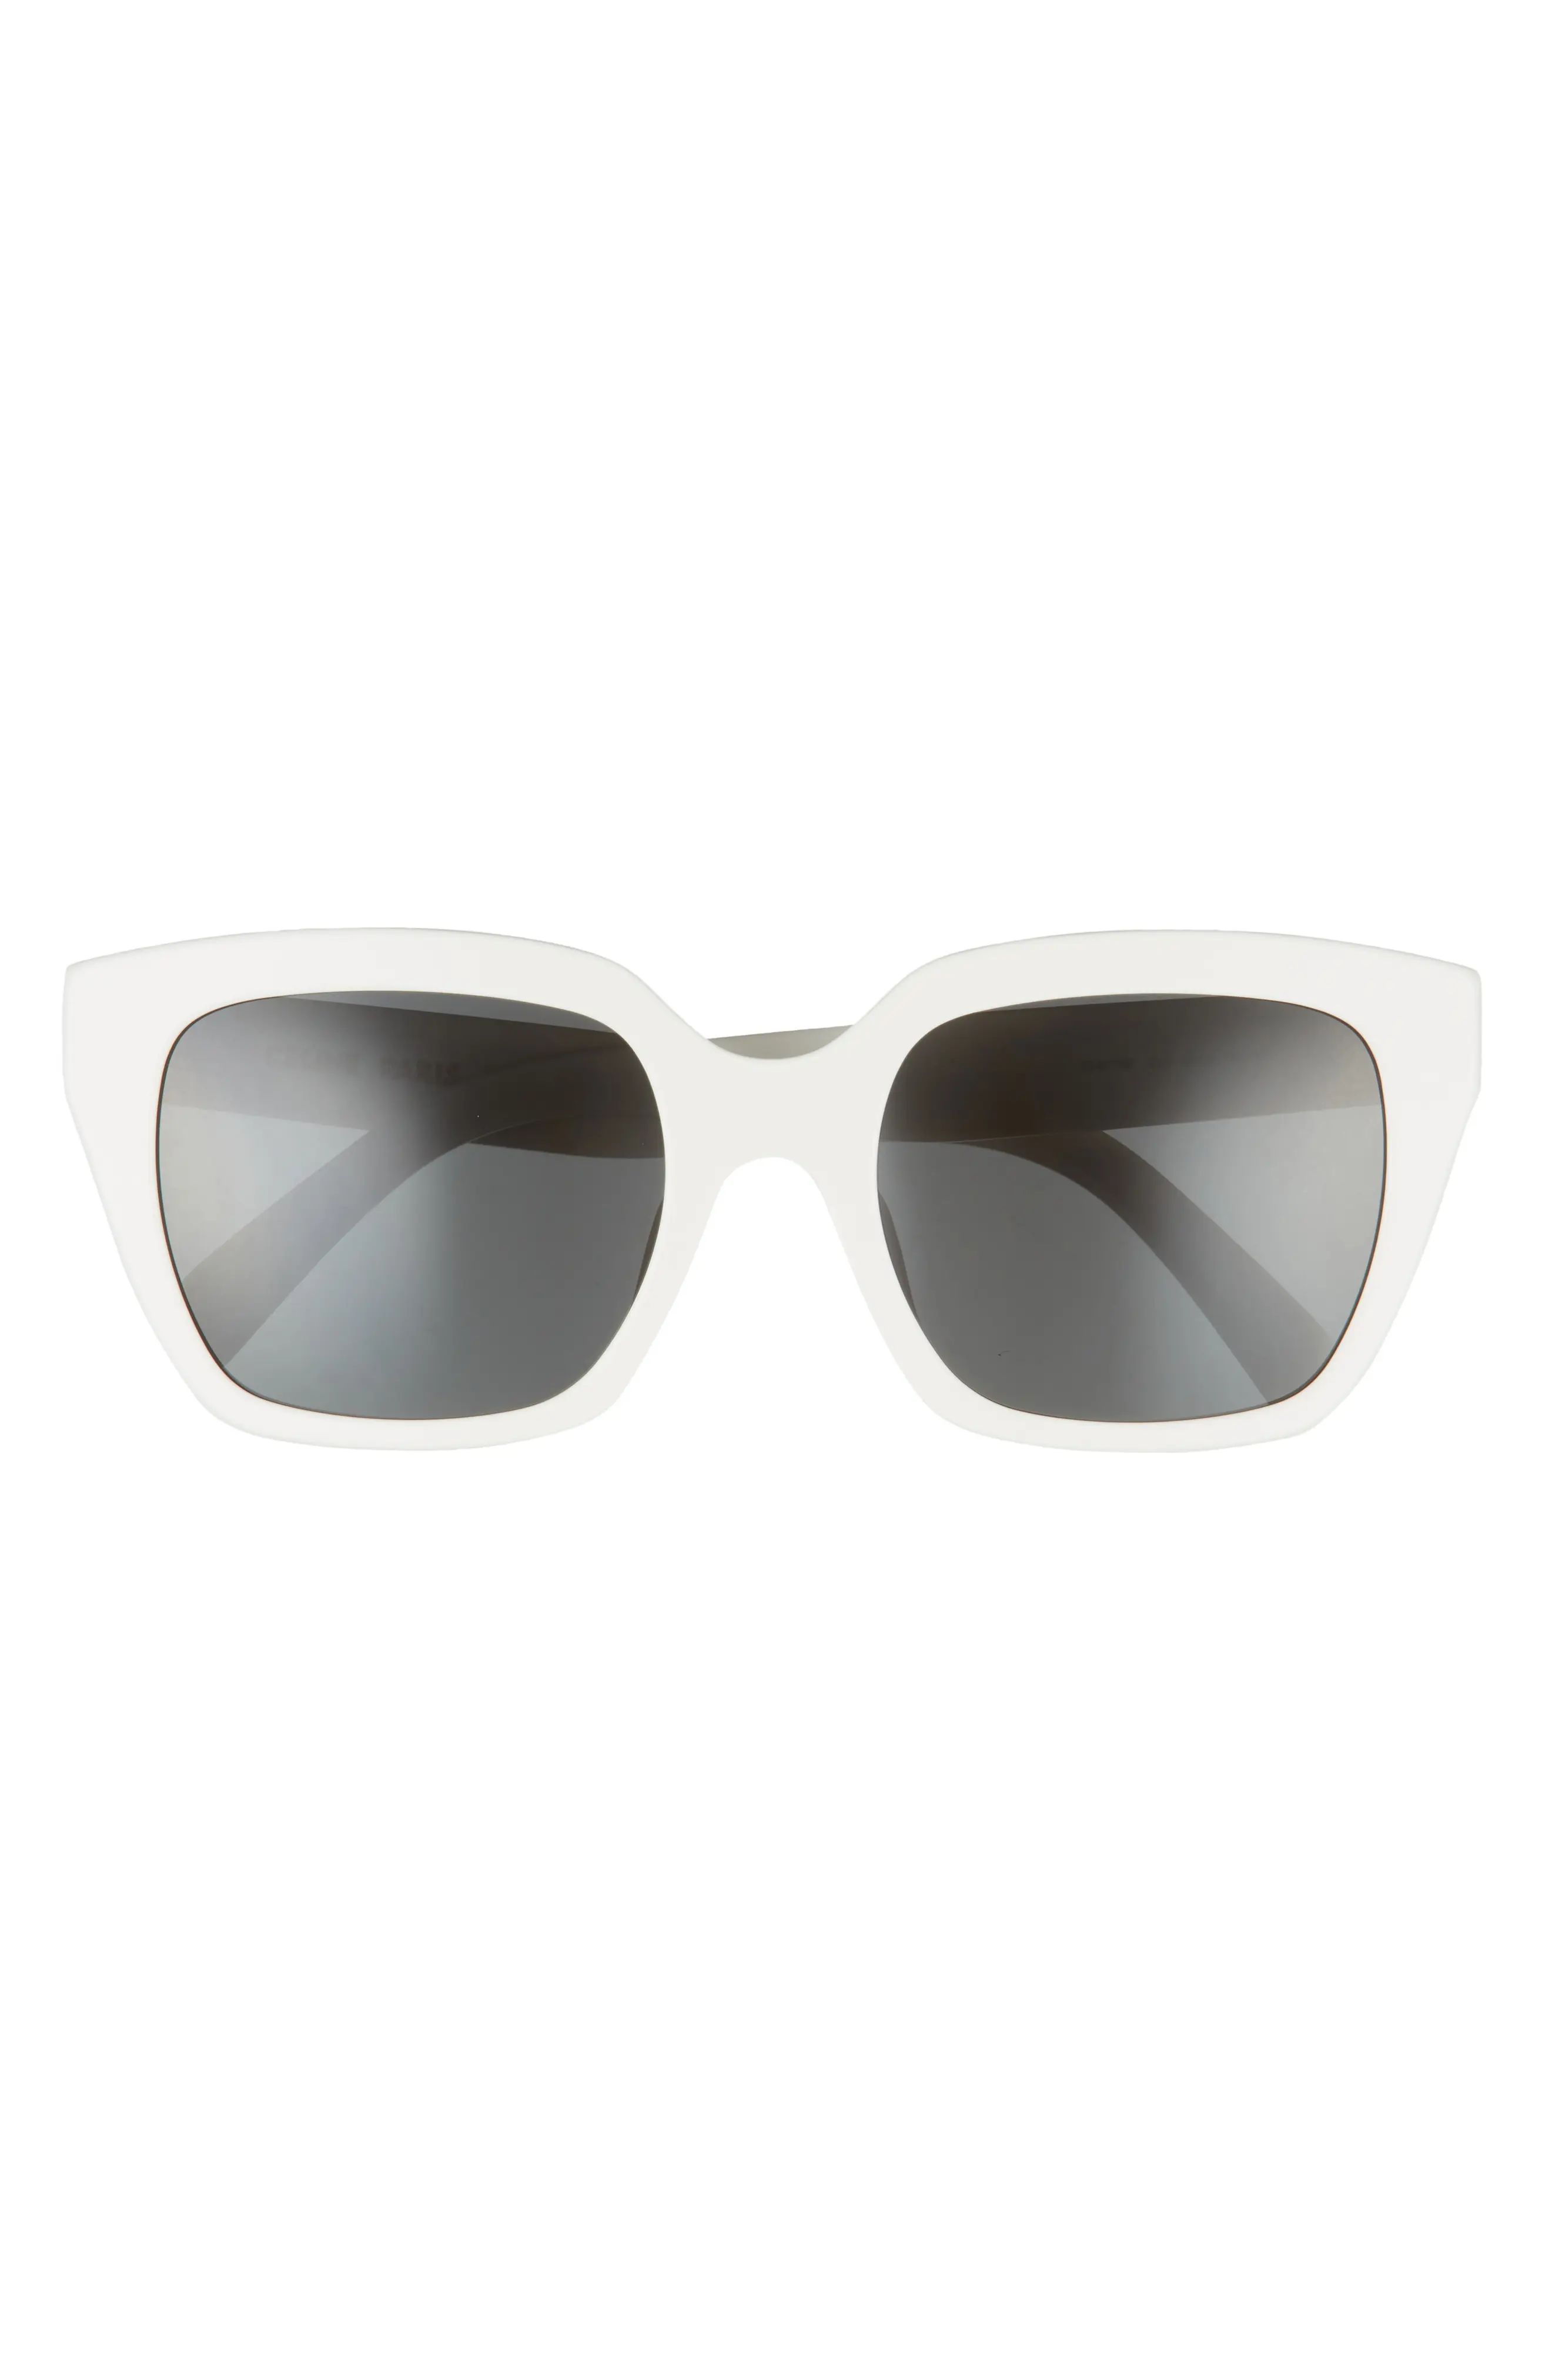 CELINE 56mm Cat Eye Sunglasses in Ivory /Smoke at Nordstrom | Nordstrom